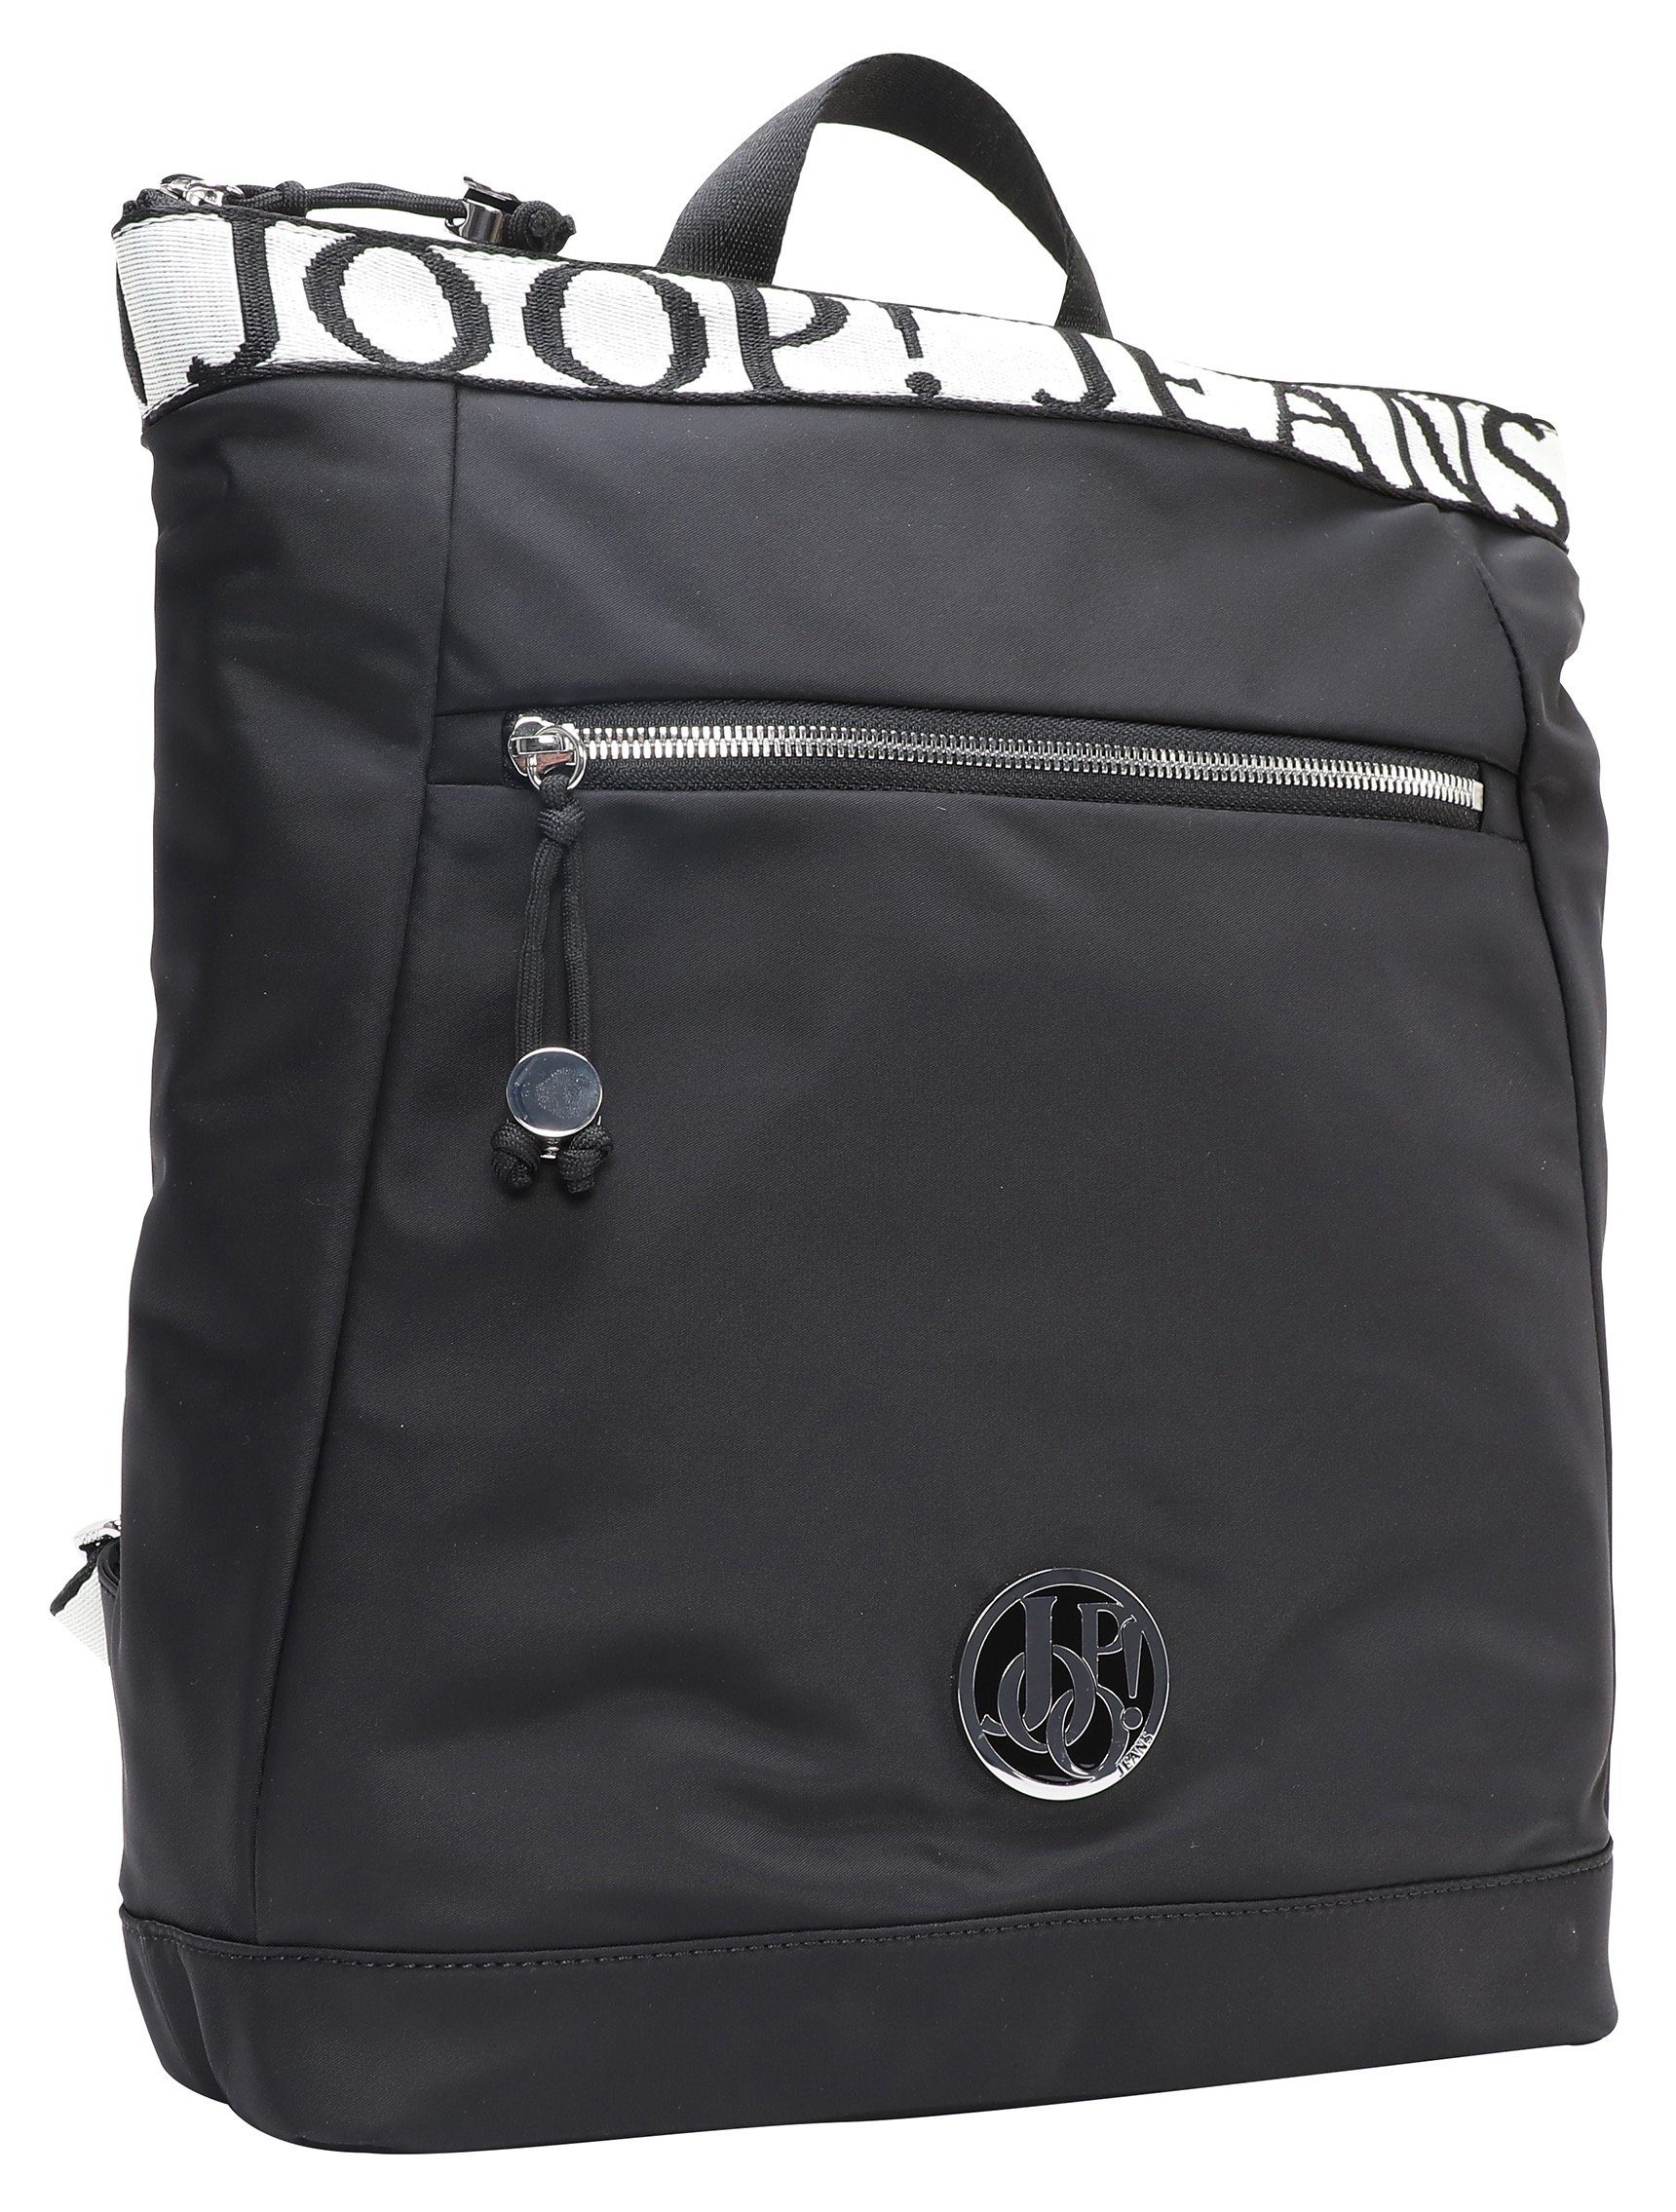 Jeans den backpack auf elva lvz, Cityrucksack Logo black Trageriemen Joop mit Schriftzug lietissimo